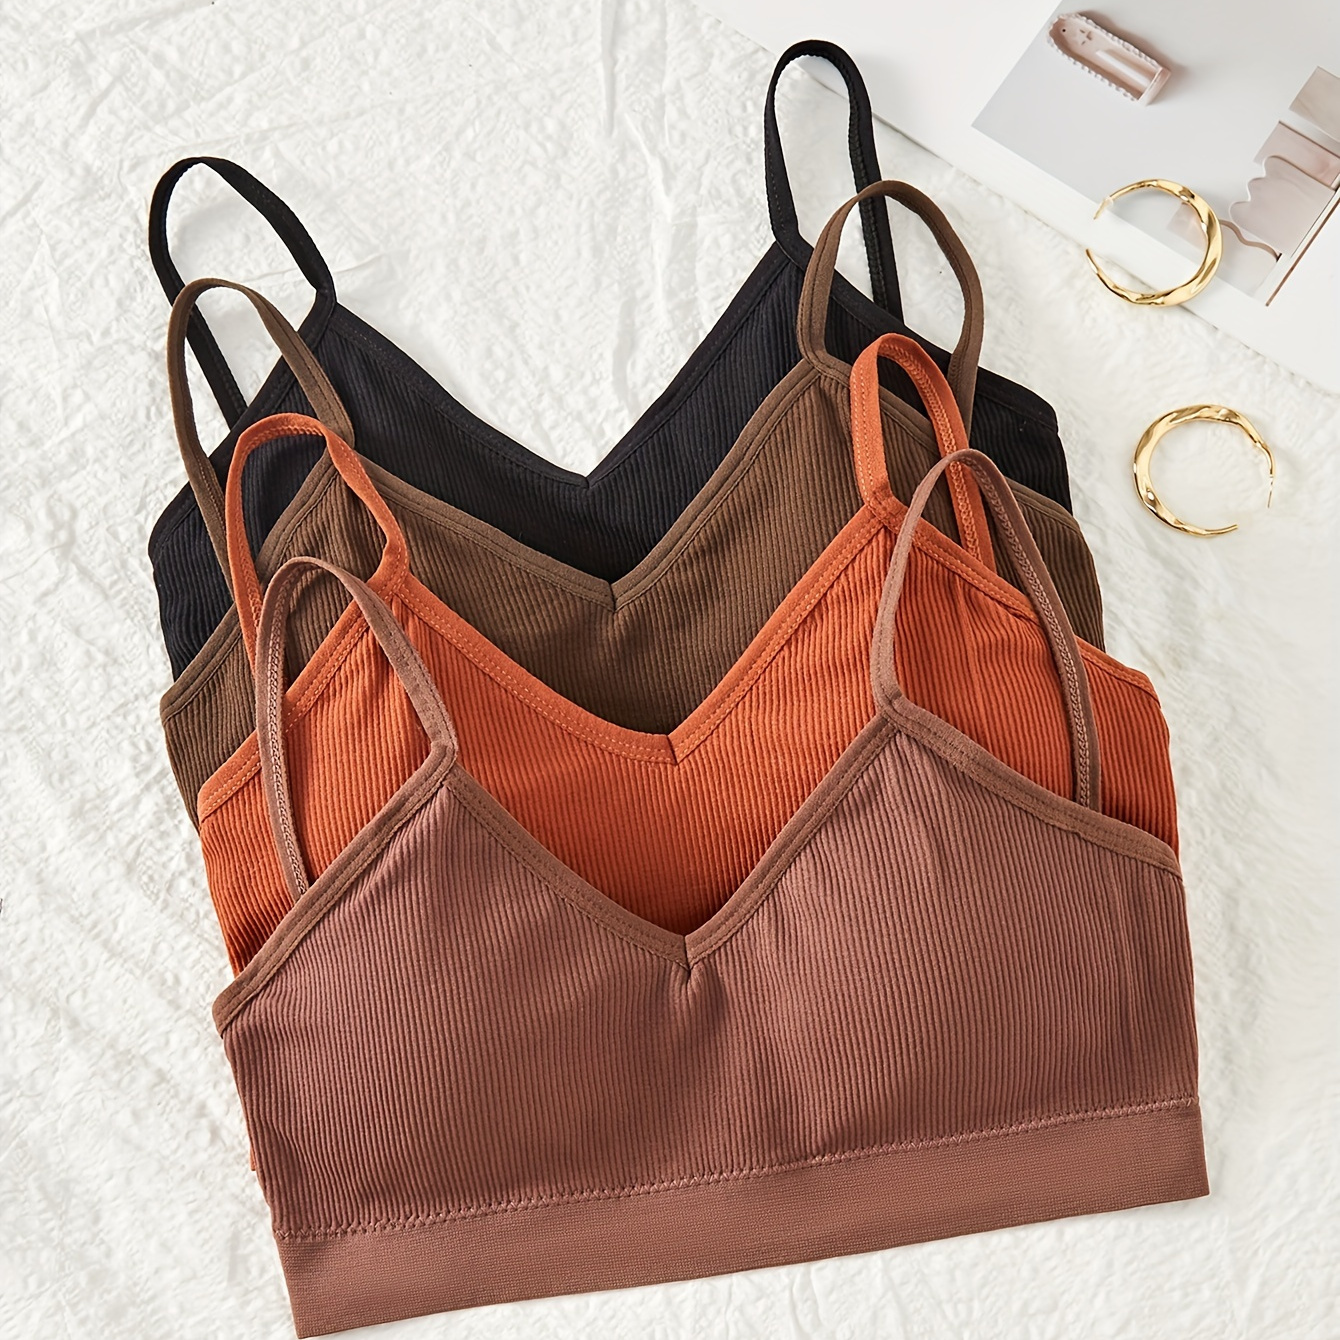 

4-pack Women's Casual Ribbed Crop Tank Tops, Comfort Stretch Blend Bralettes In Black/brown/orange/tan Colors, Multiple Straps Design, Breathable Underwear Set